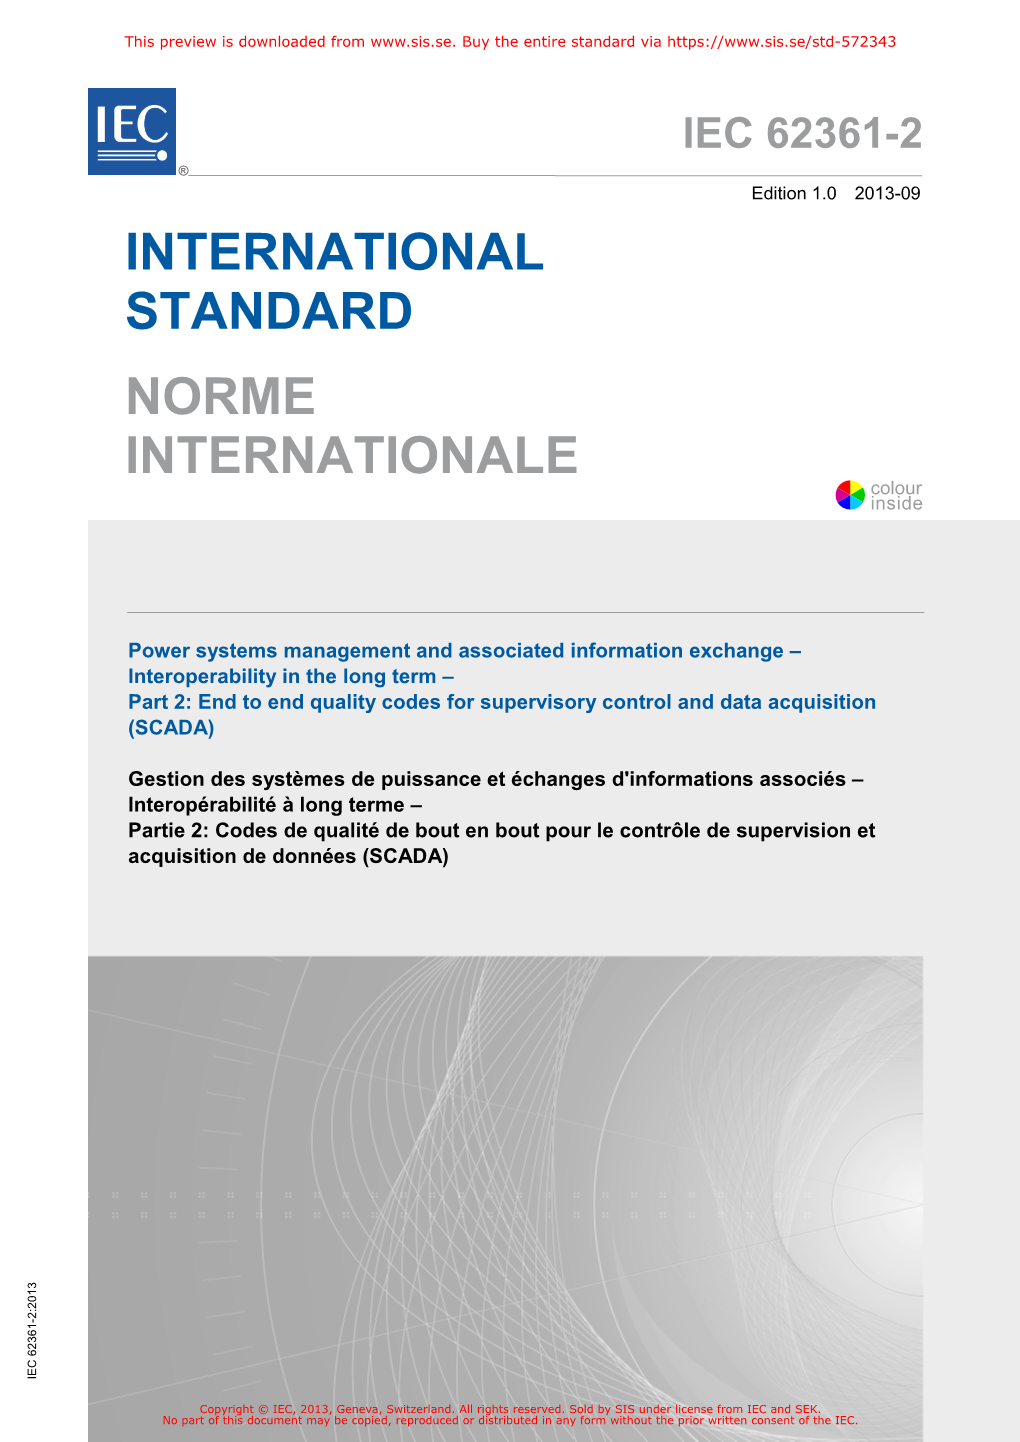 International Standard Norme Internationale